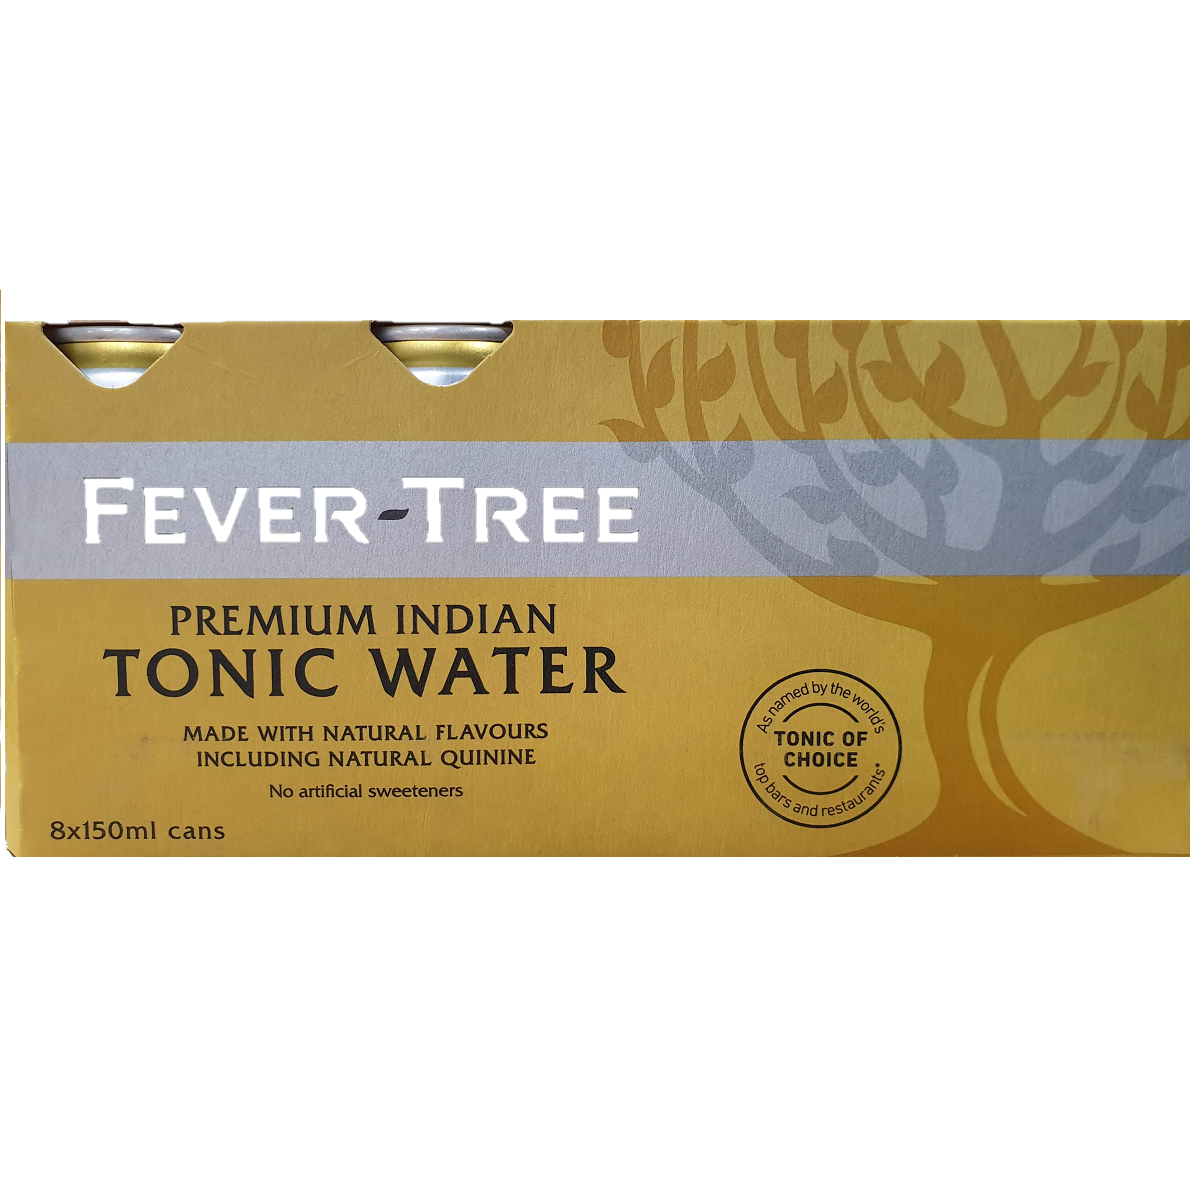 Fever-Tree Premium Indian Tonic Water 8x150ml